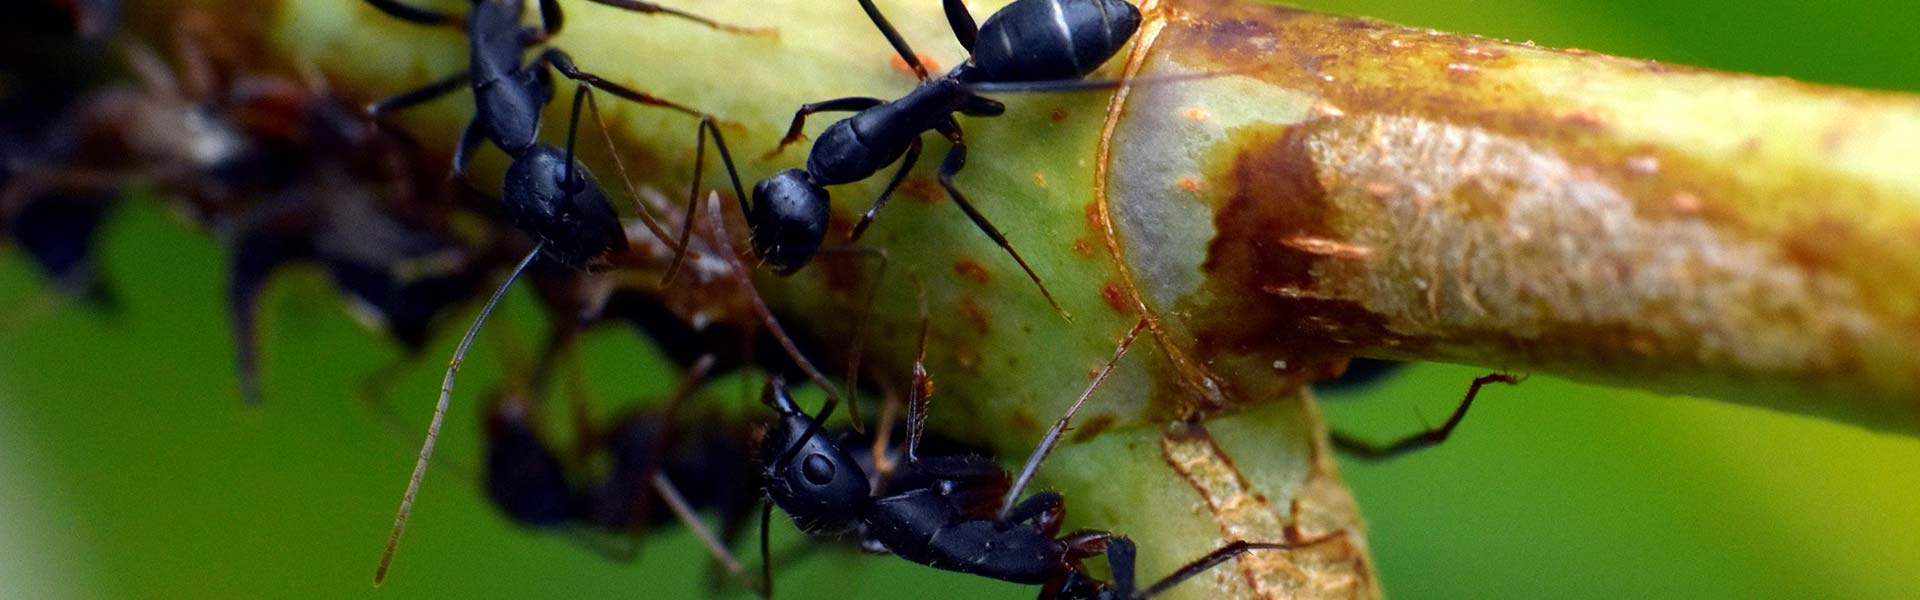 Ants on plants stem